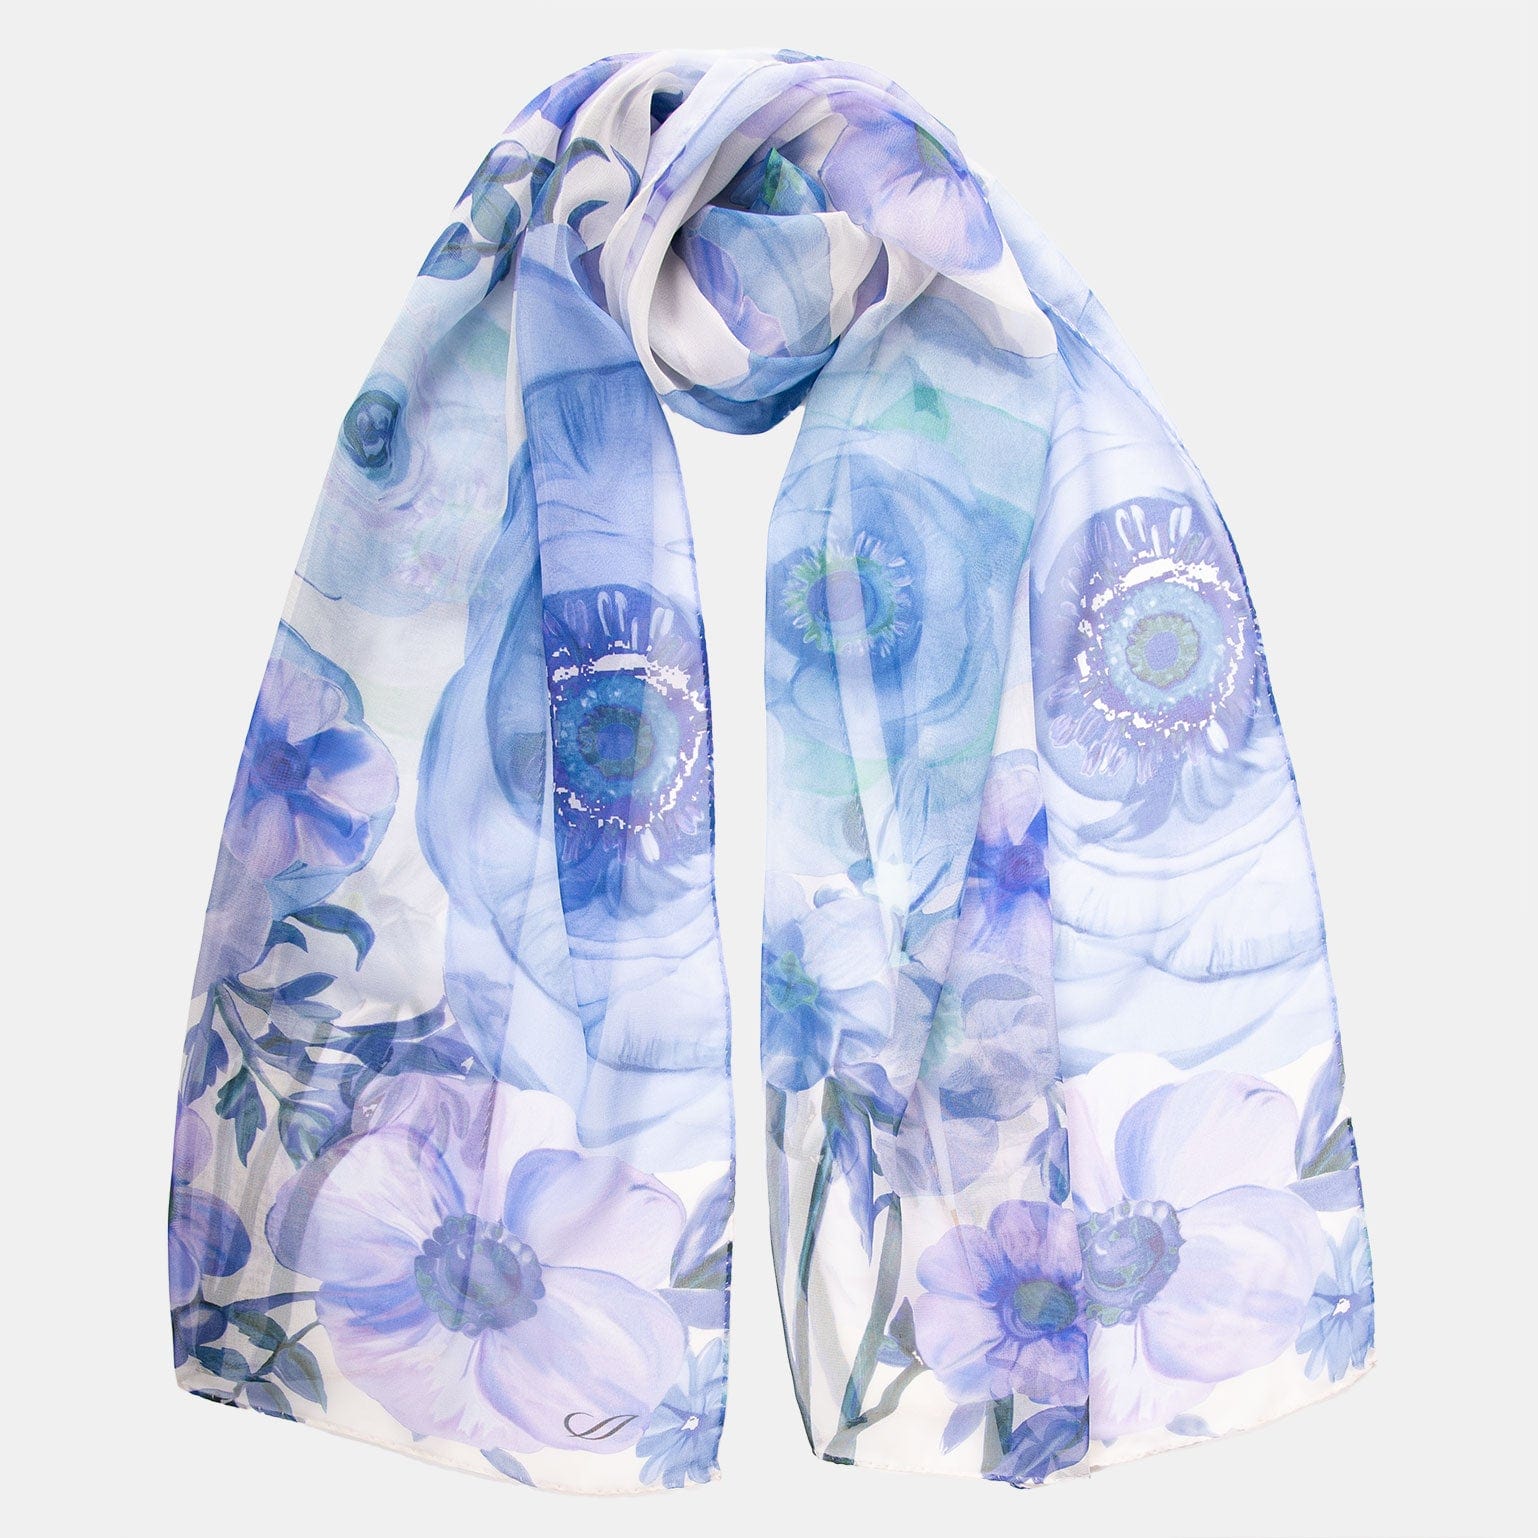 Pastel Blue Floral Scarf | Pastel Summer Scarf with Elegant Floral Print 